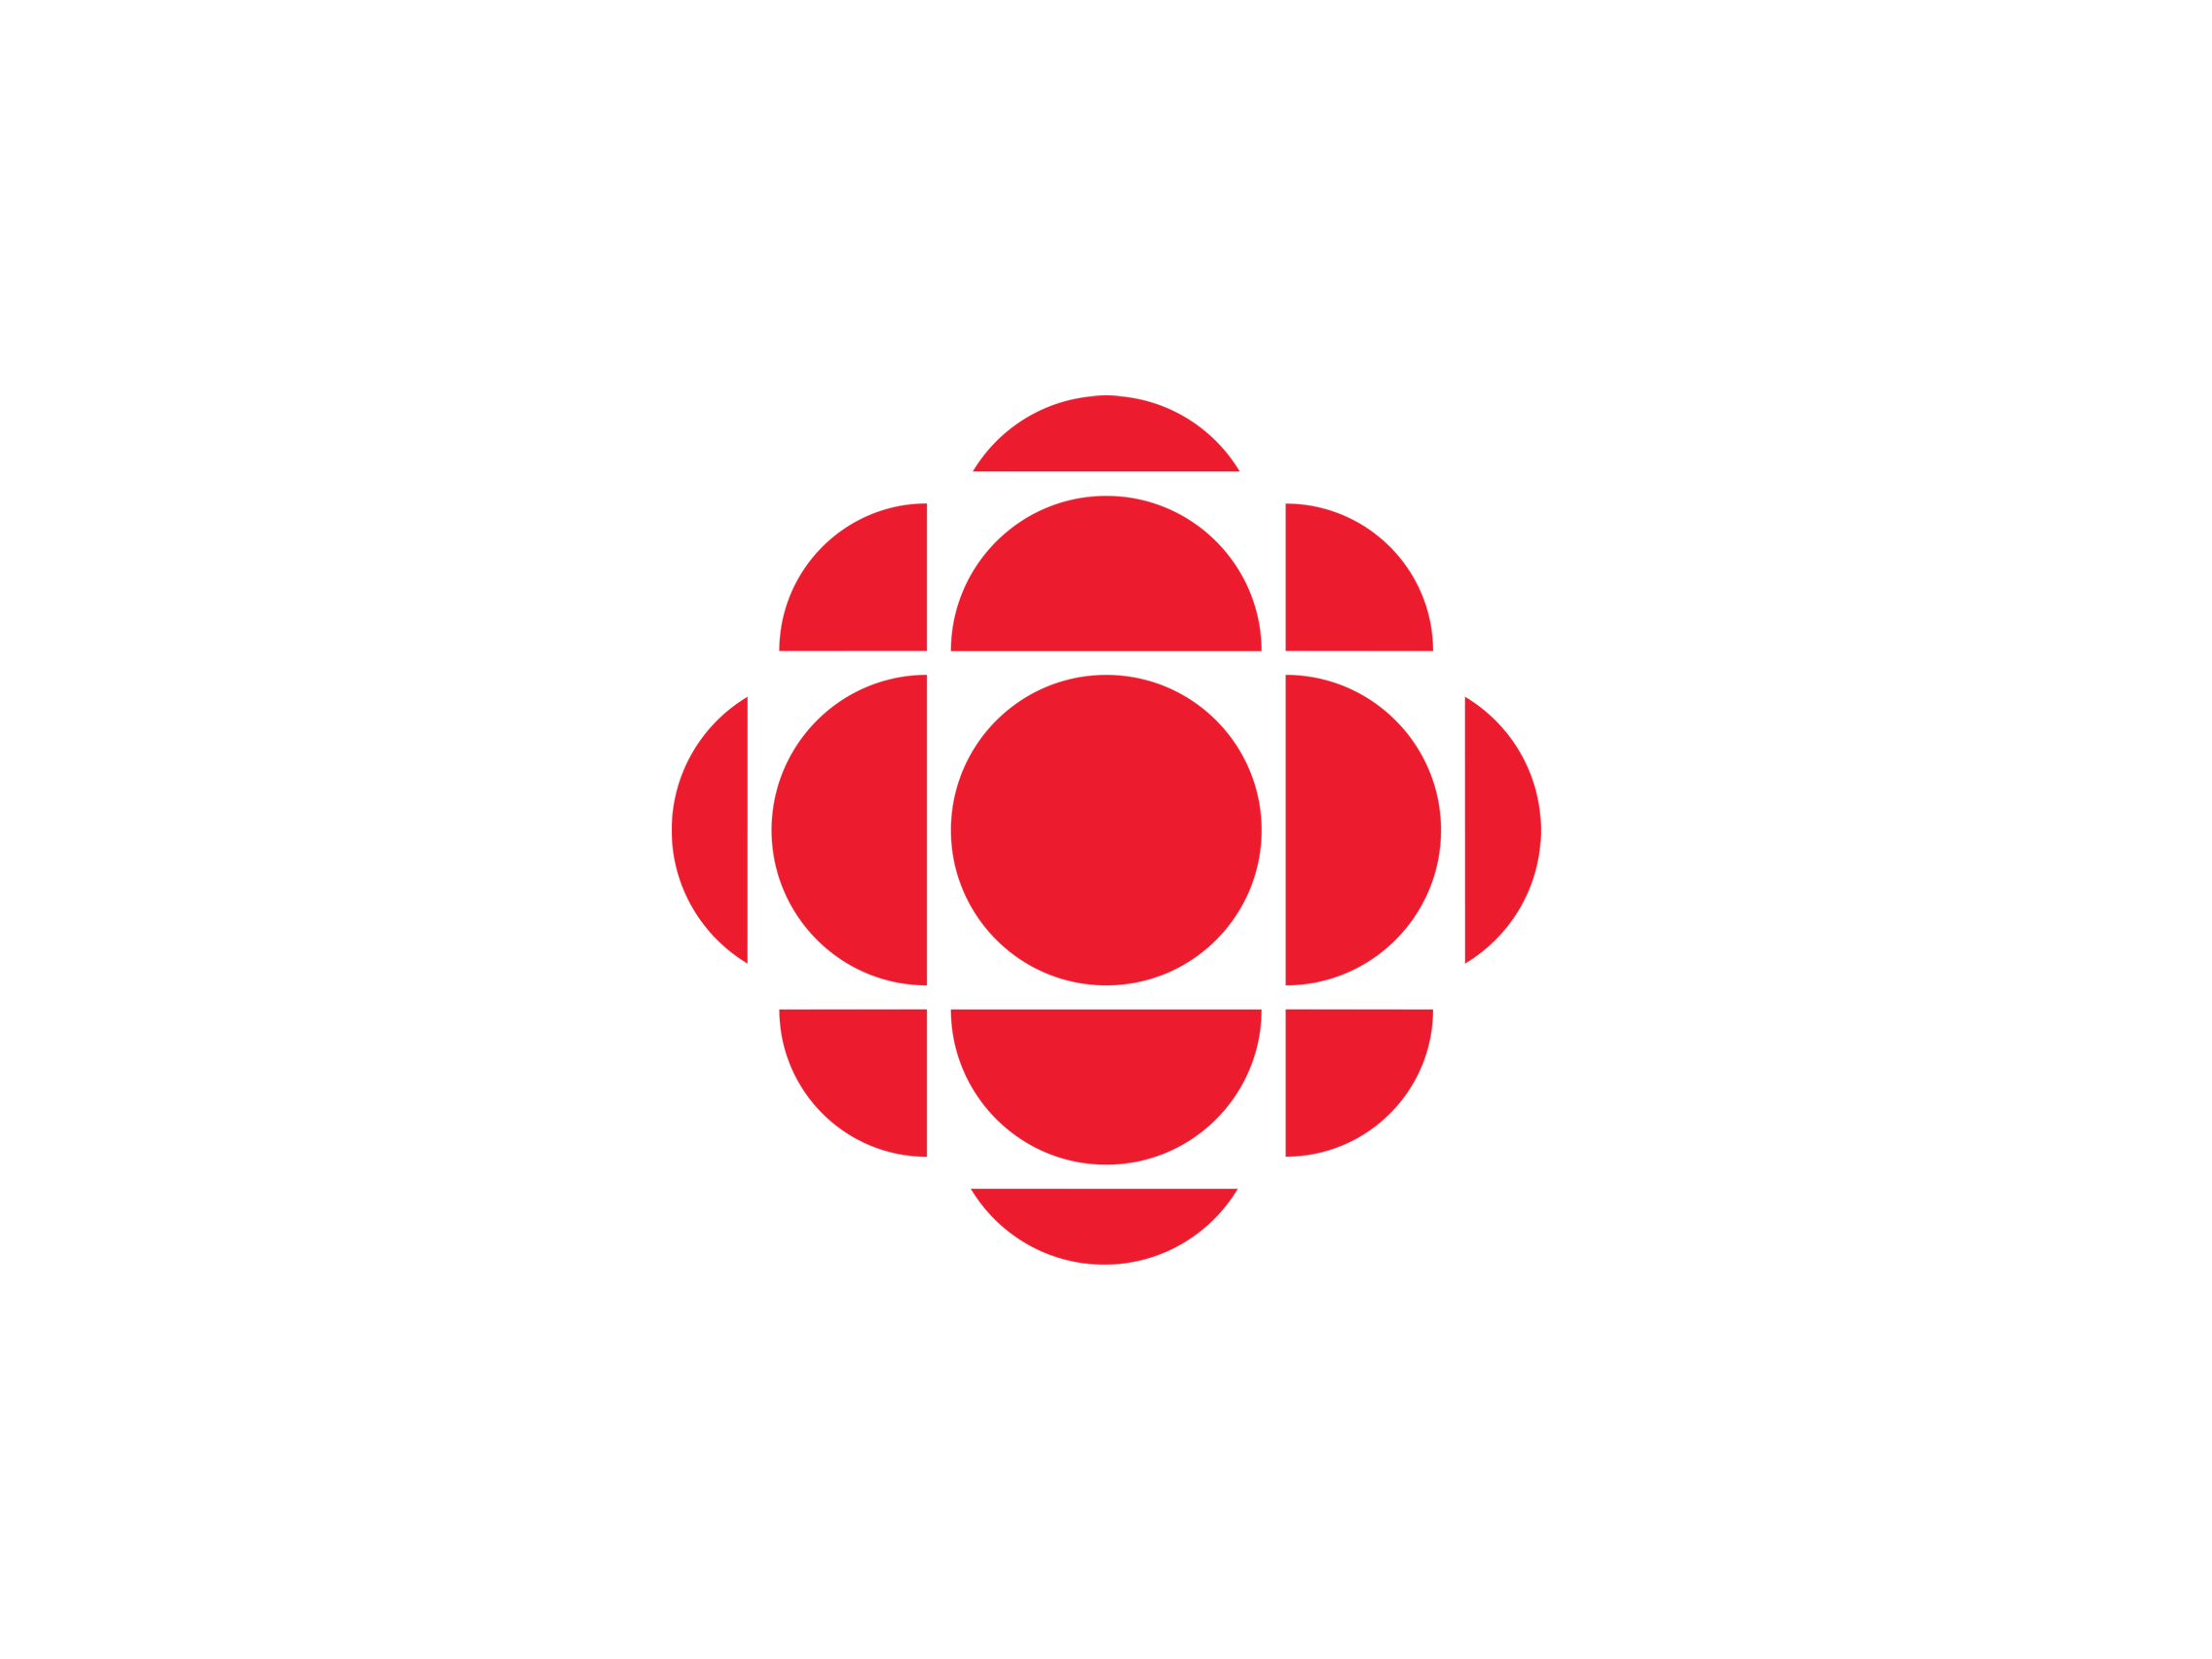 CBC-logo.png